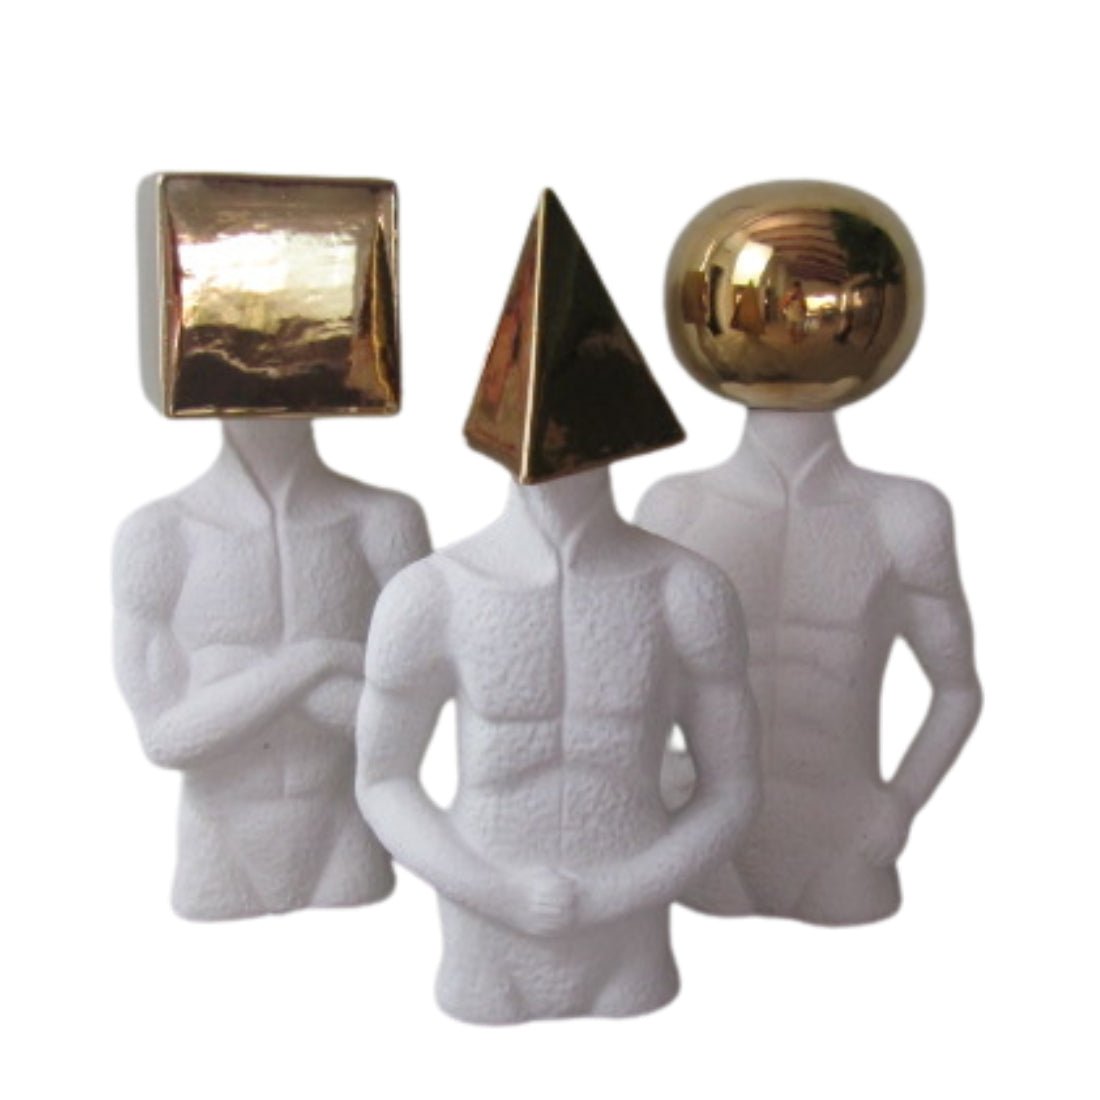 Ornaments | Round Head Ceramic Figurine set of 3